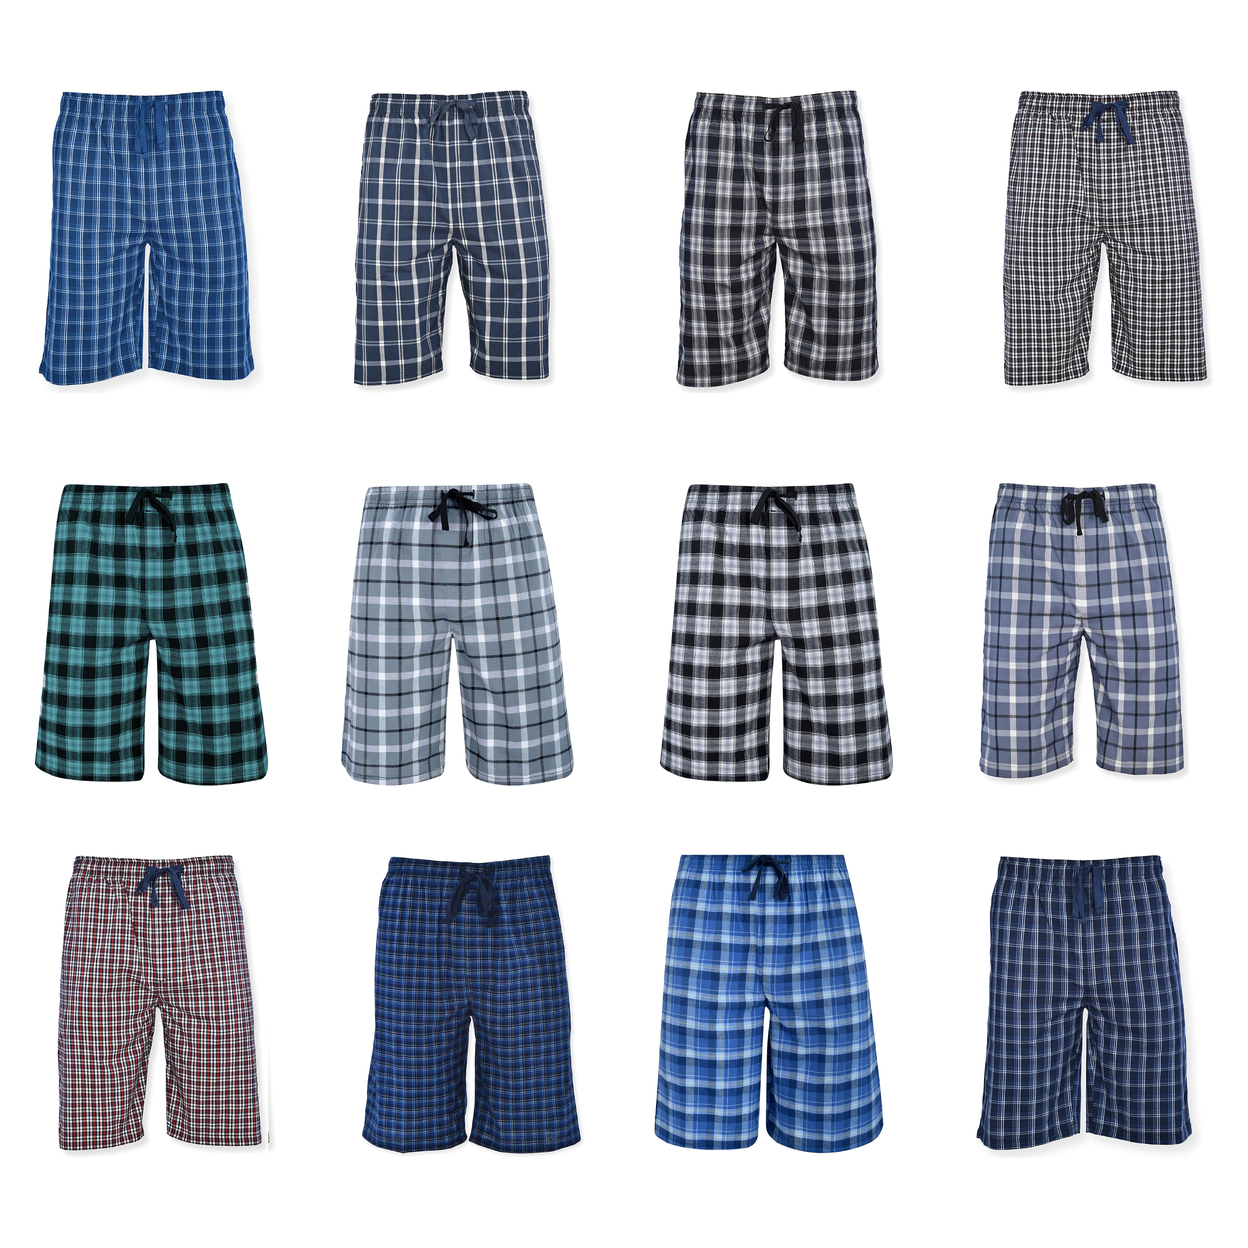 3-Pack: Men's Ultra Soft Plaid Lounge Pajama Sleep Wear Shorts - Small